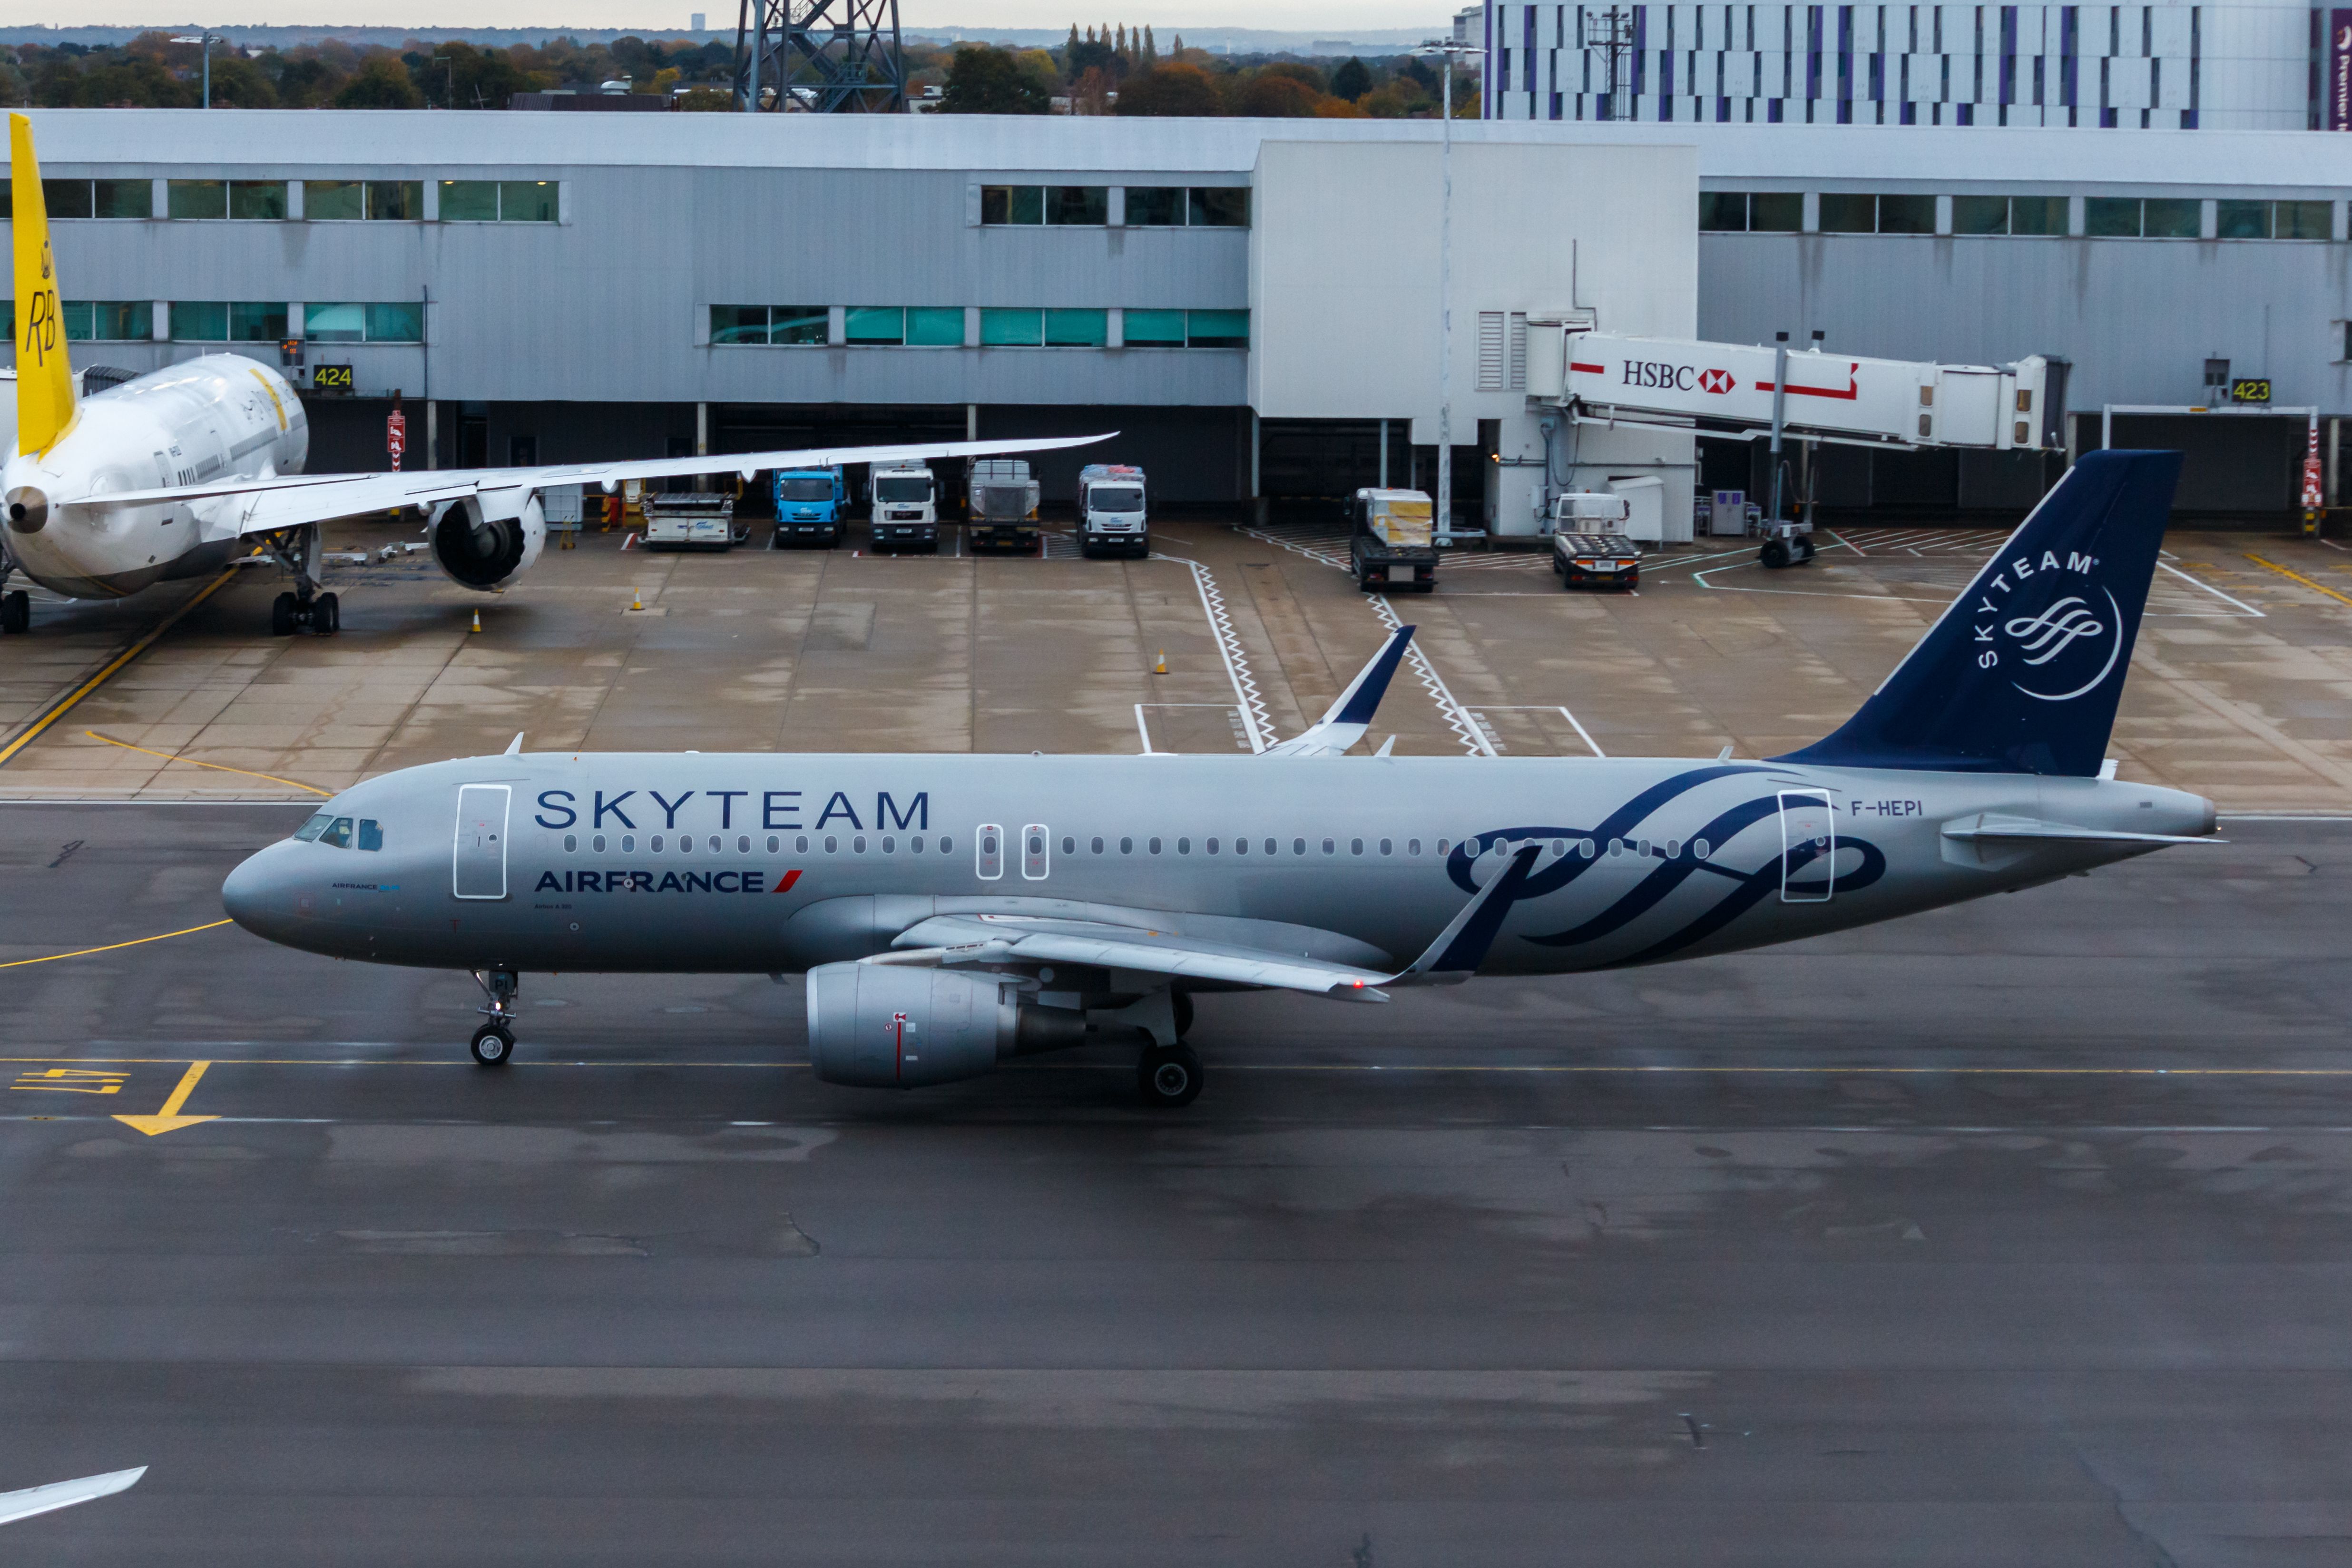 SkyTeam Air France livery at Heathrow airport